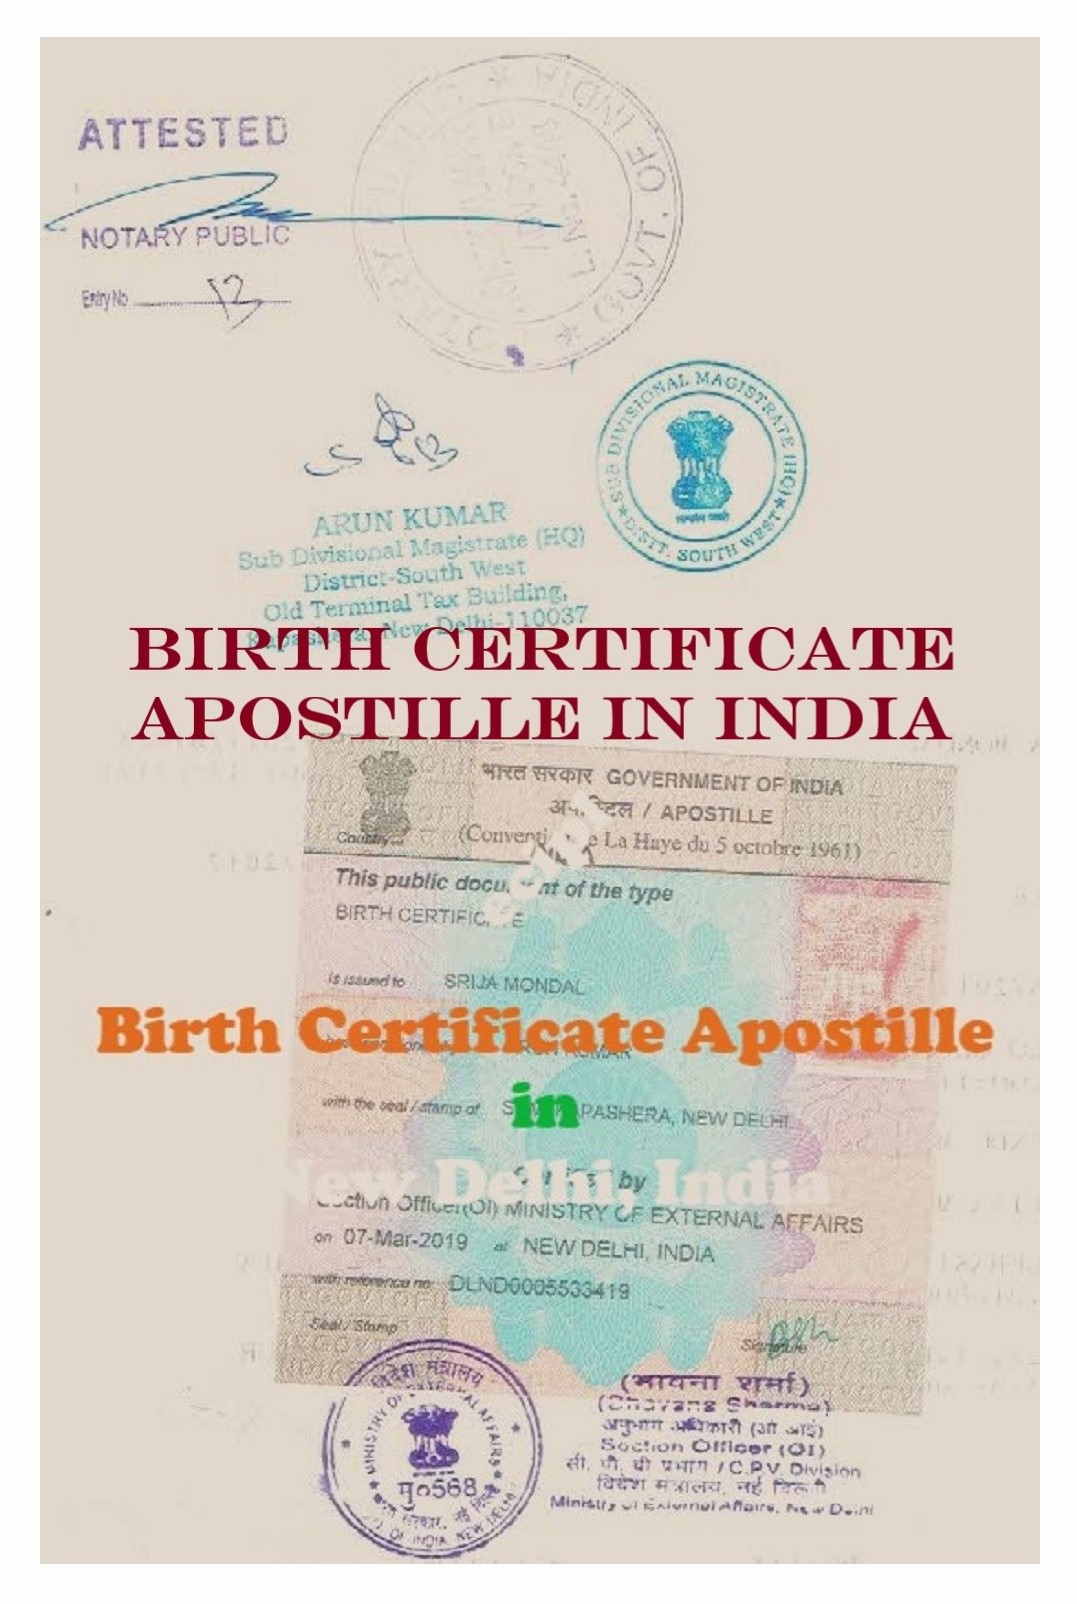 Birth Certifciate Apostille Attestation in Delhi, India